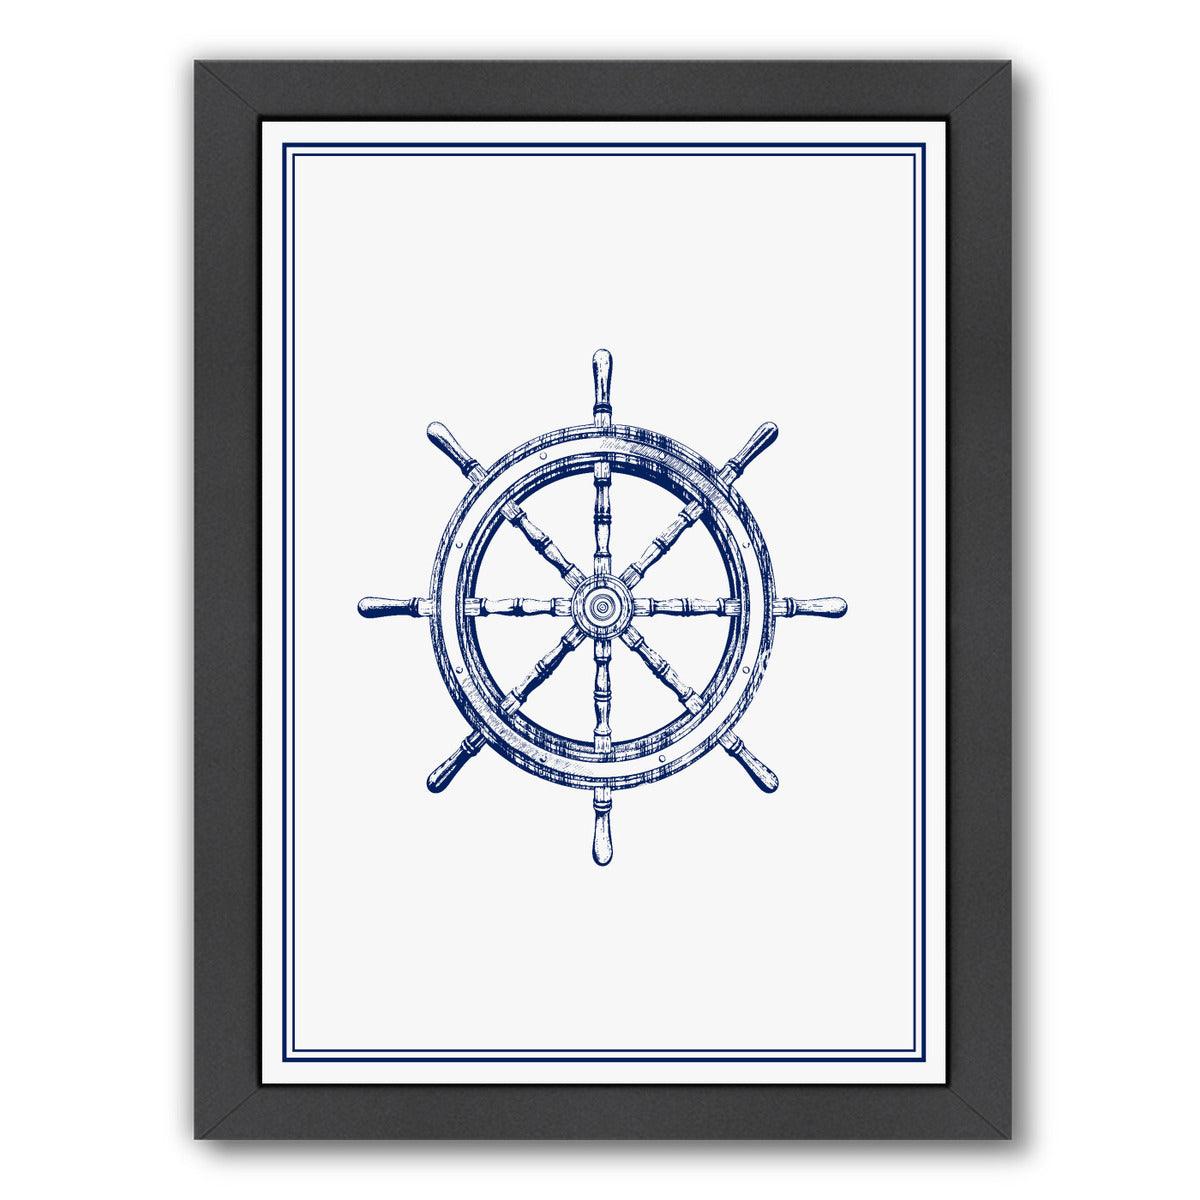 Ship Wheel By Nuada - Black Framed Print - Wall Art - Americanflat